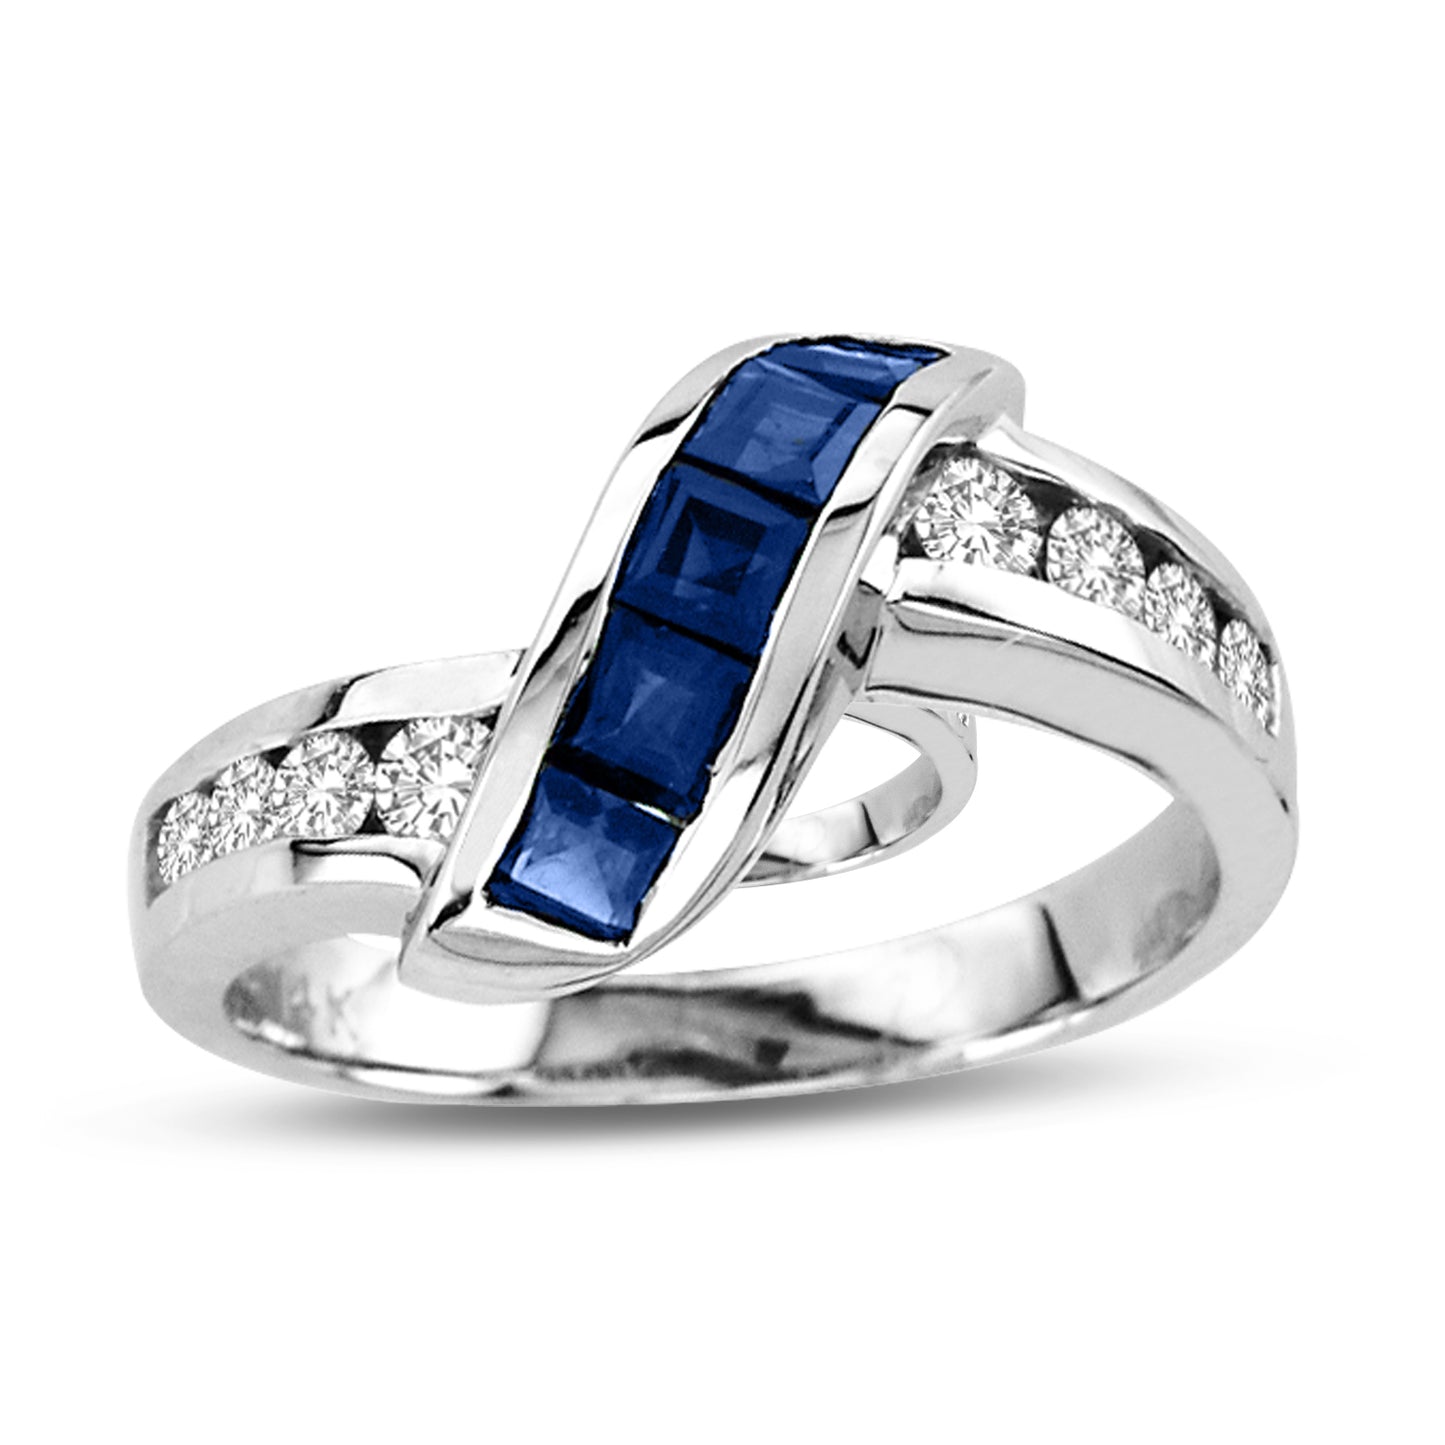 1 1/6ct Blue Sapphire & Diamond Ring in 14k White Gold